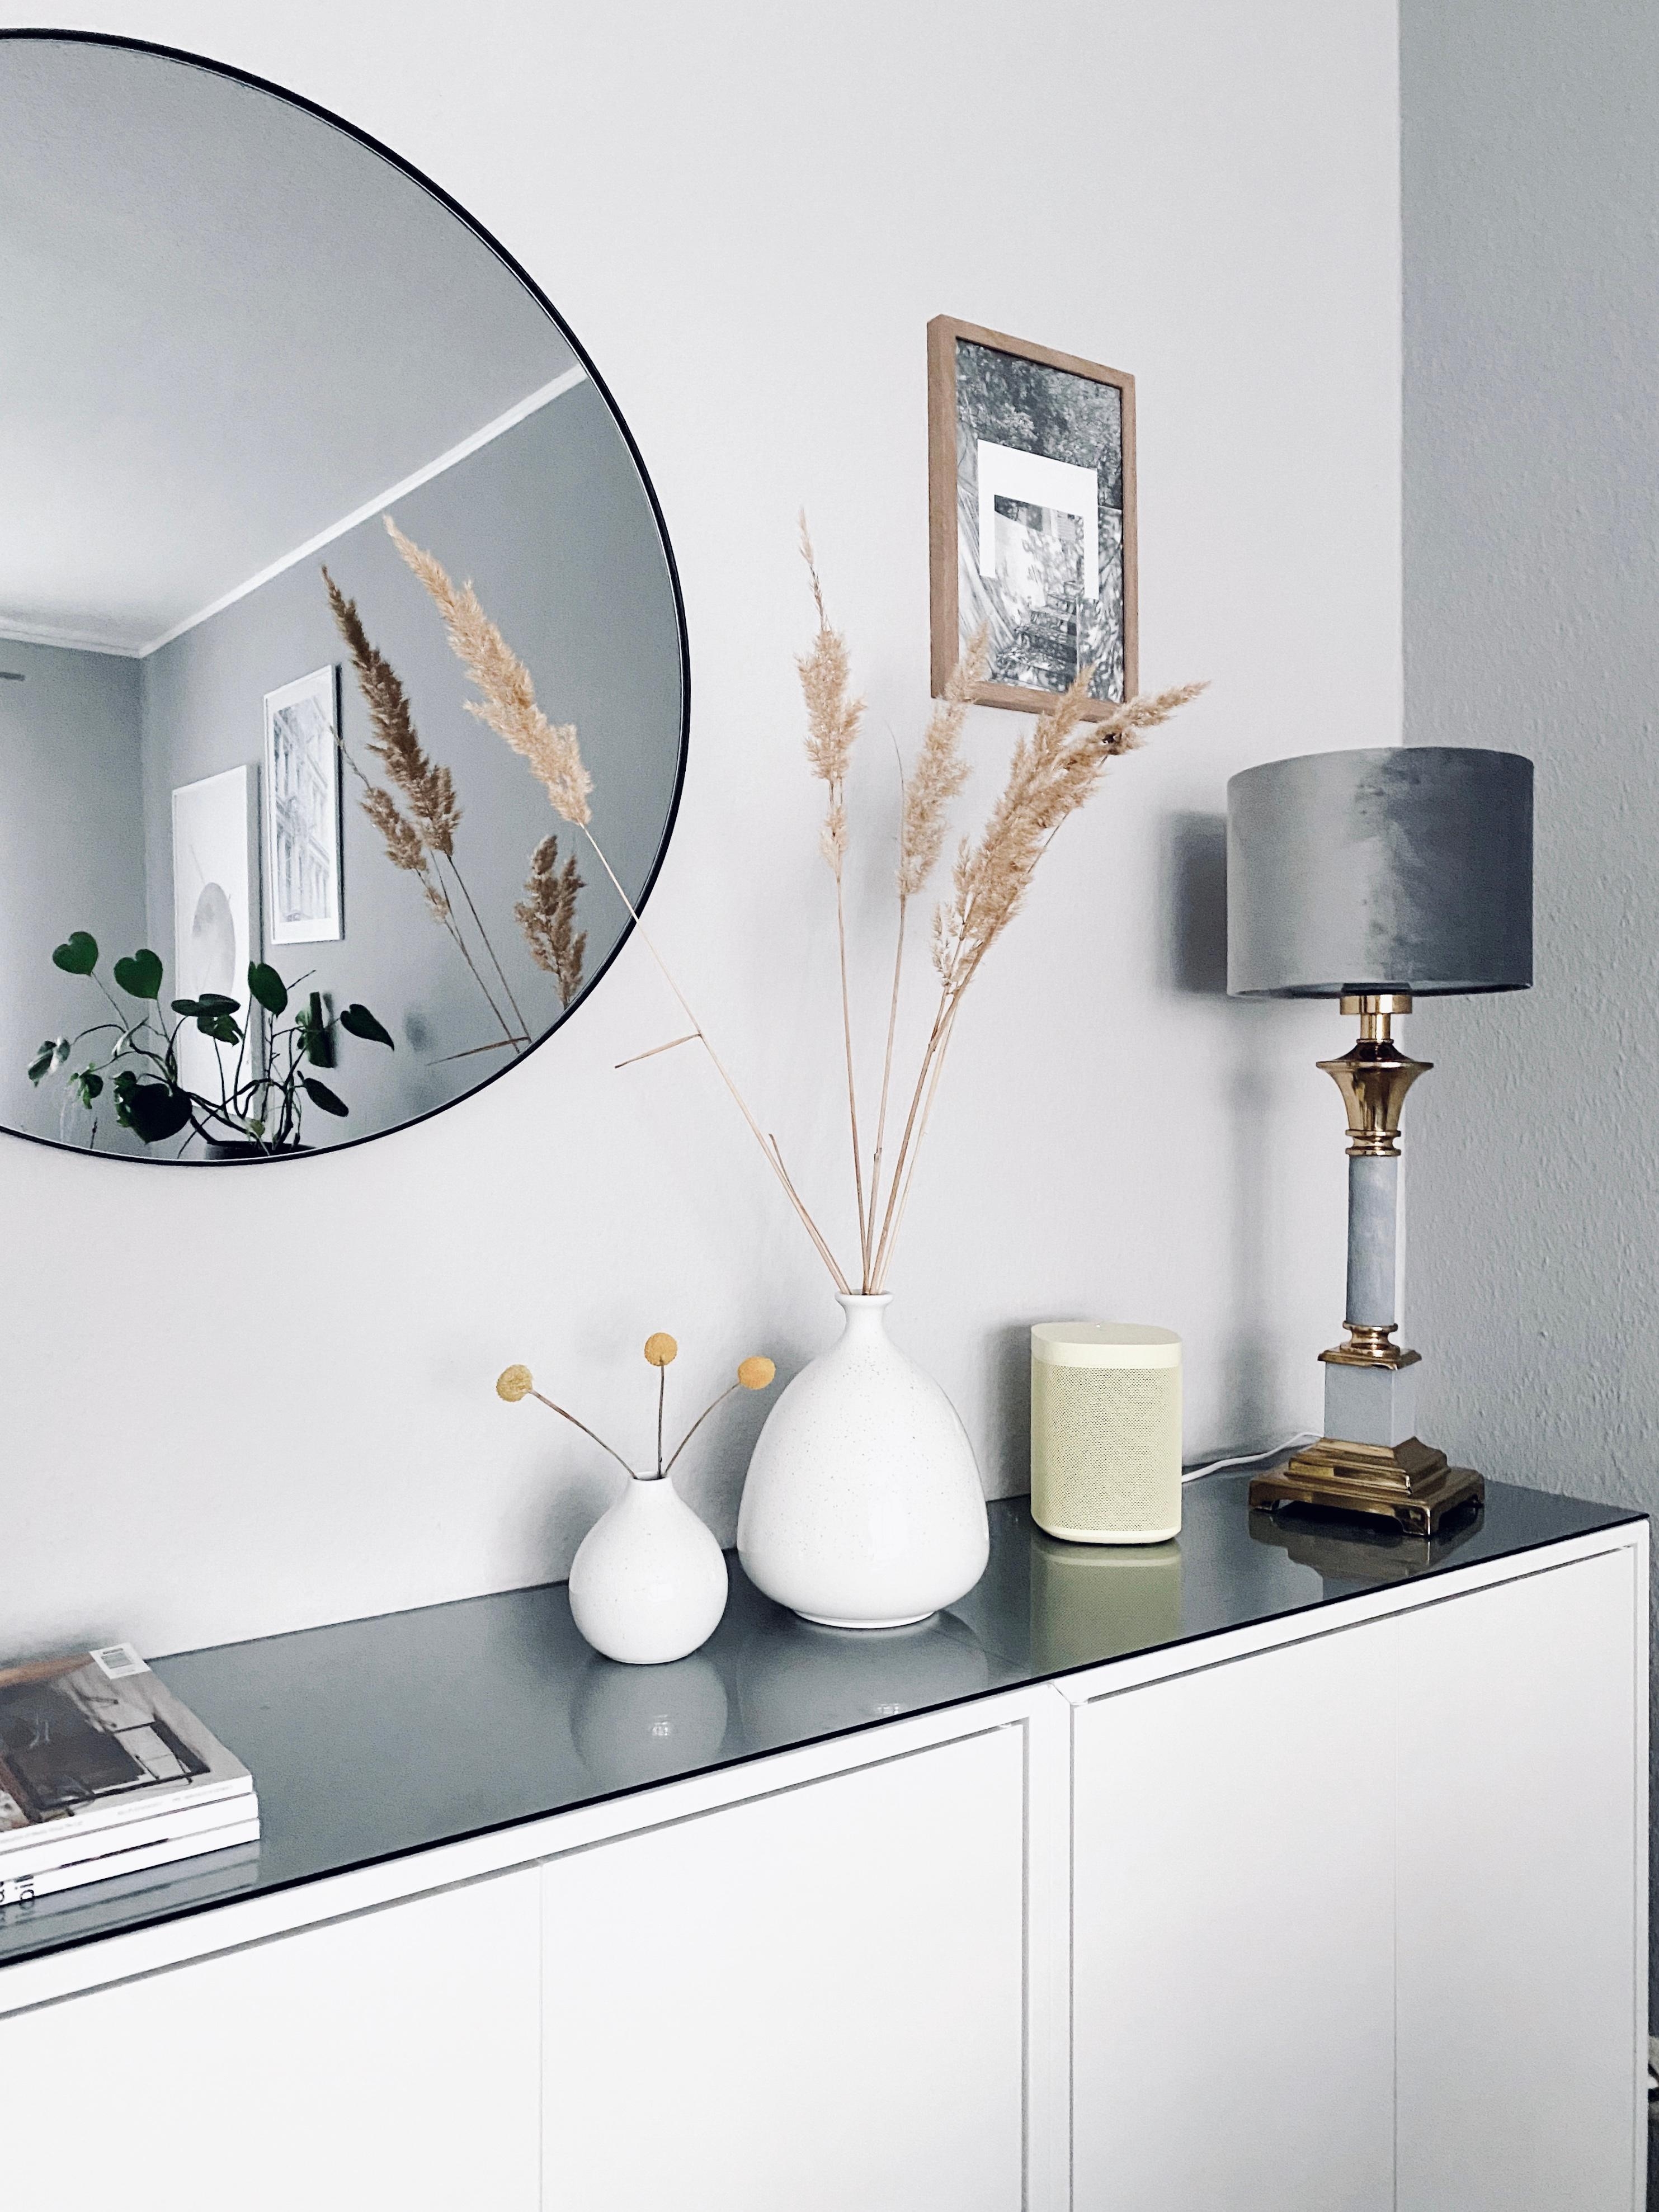 #greyinterior #nordichome #scandinavianliving #monochrome #minimalism #interior #livingroom #hygge #greyandwhite #poster